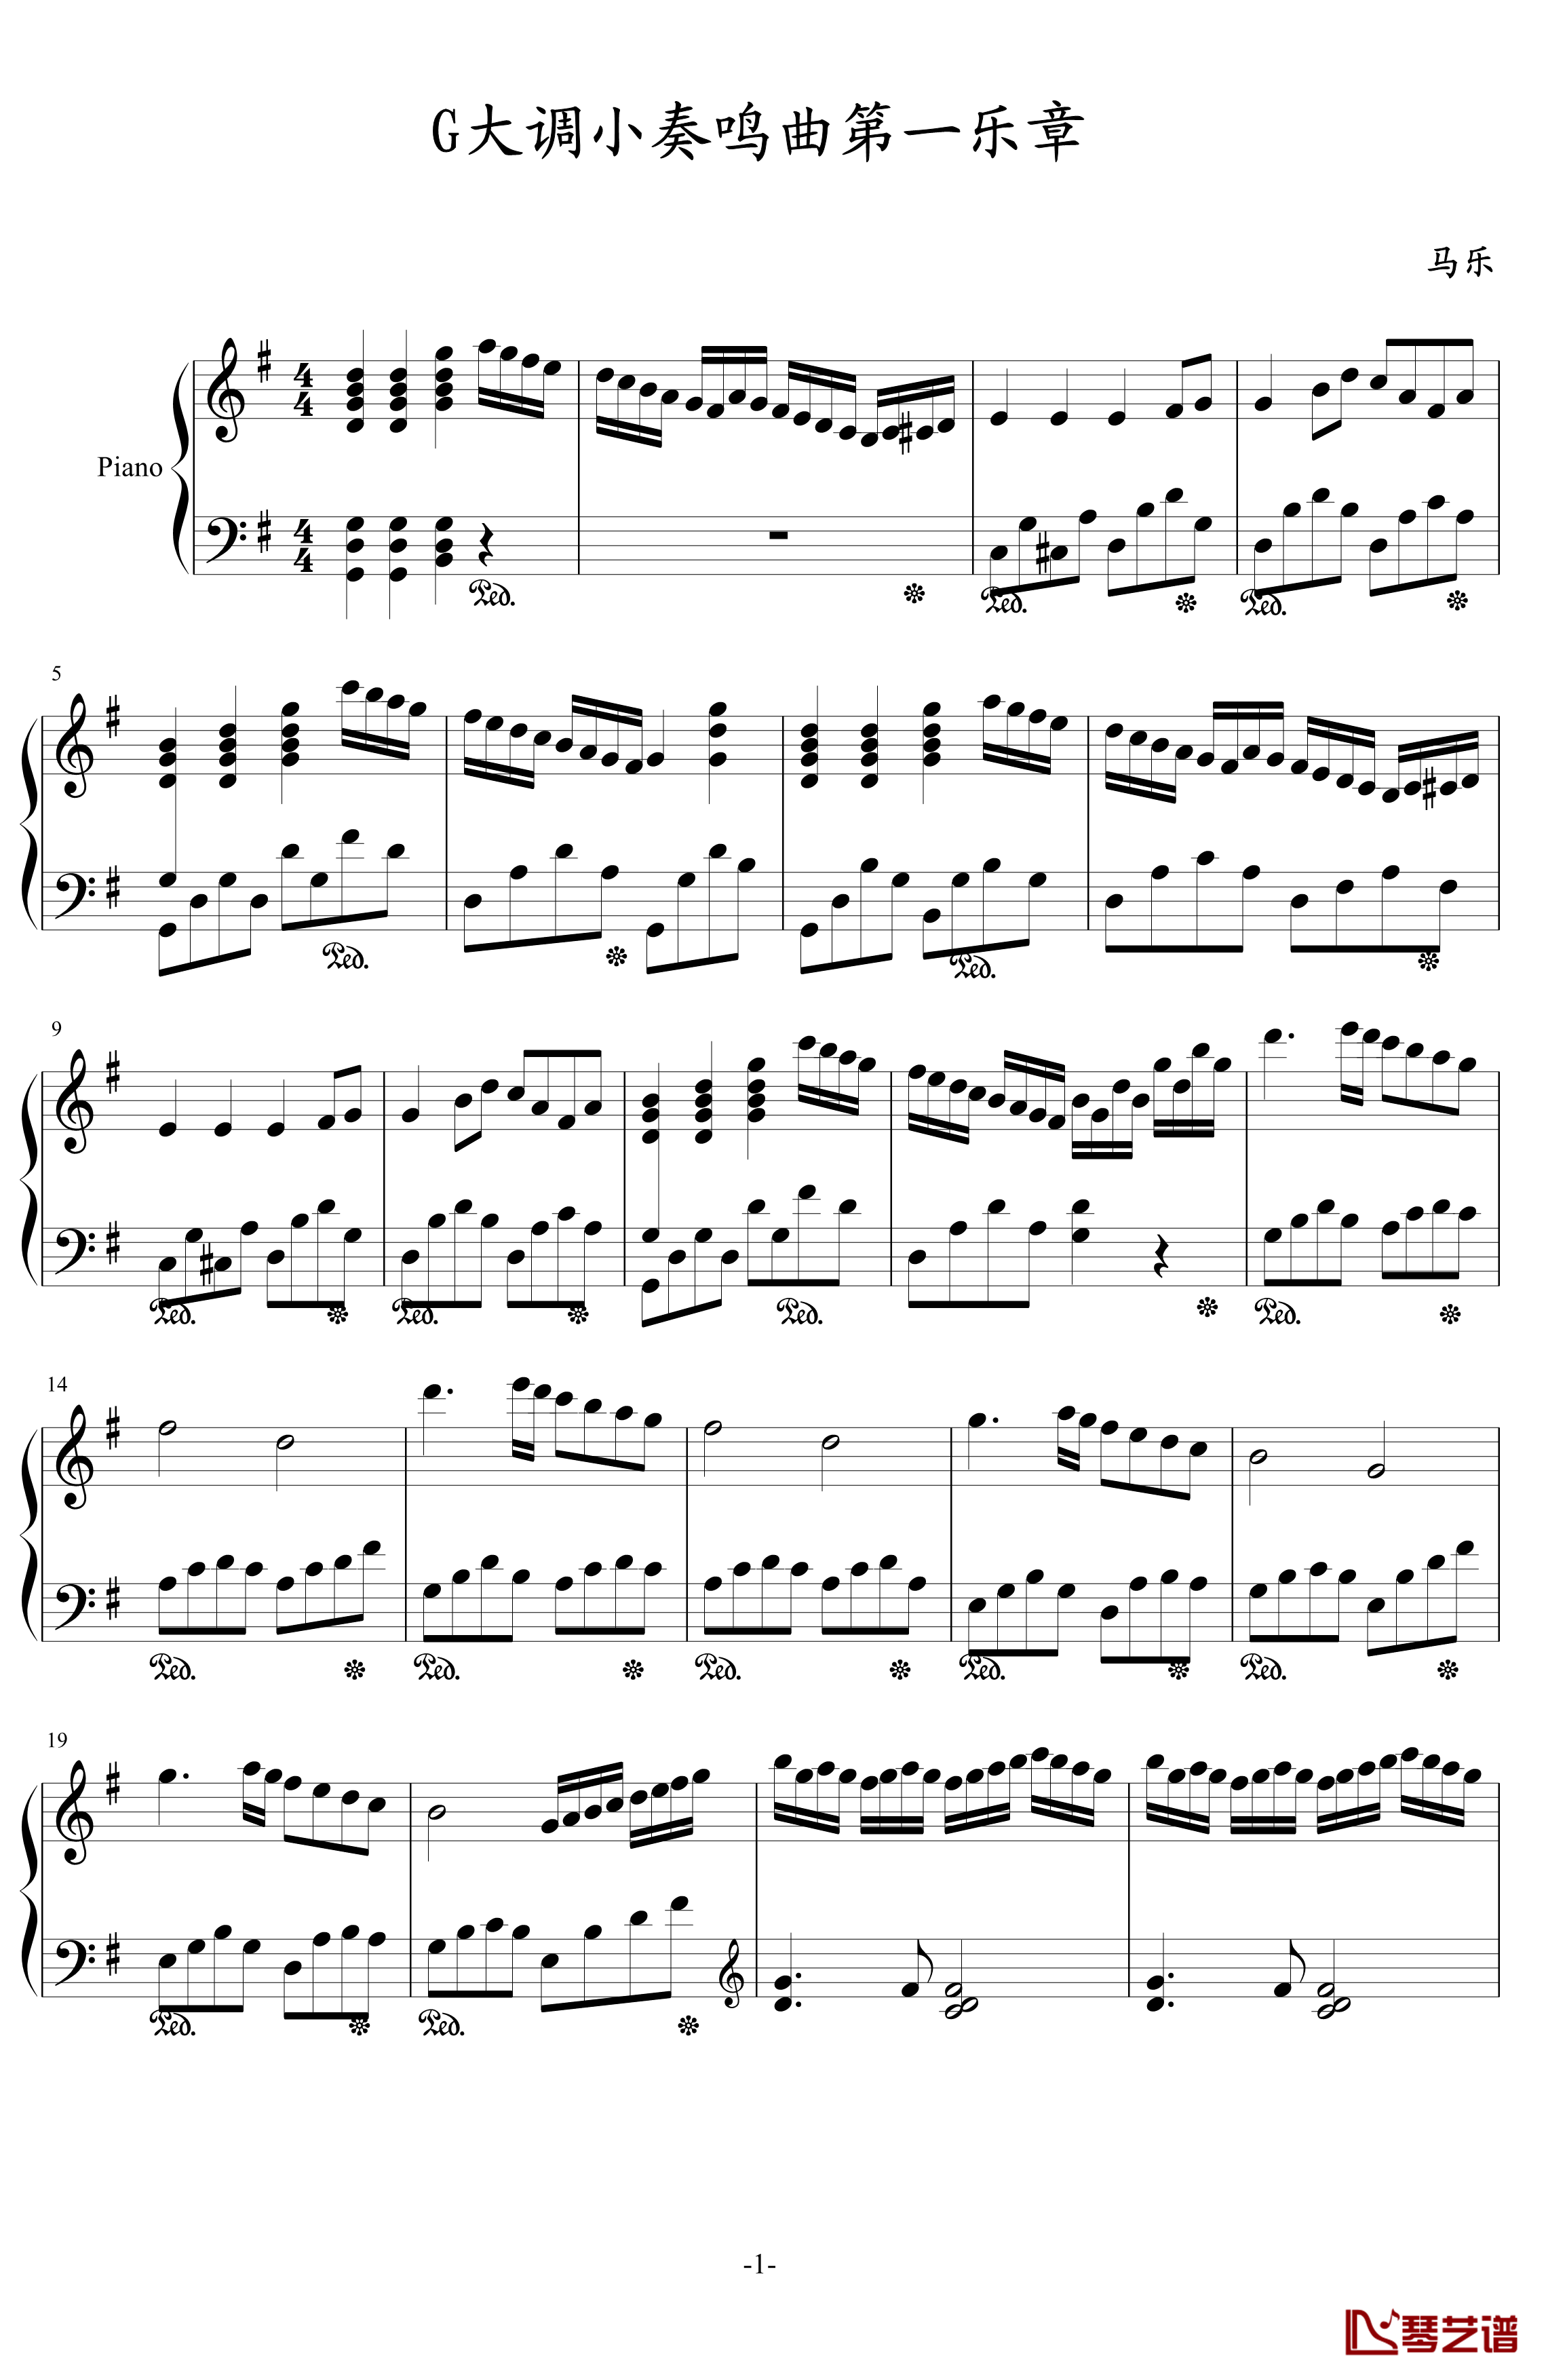 G大调小奏鸣曲第一乐章钢琴谱-梦的世界1